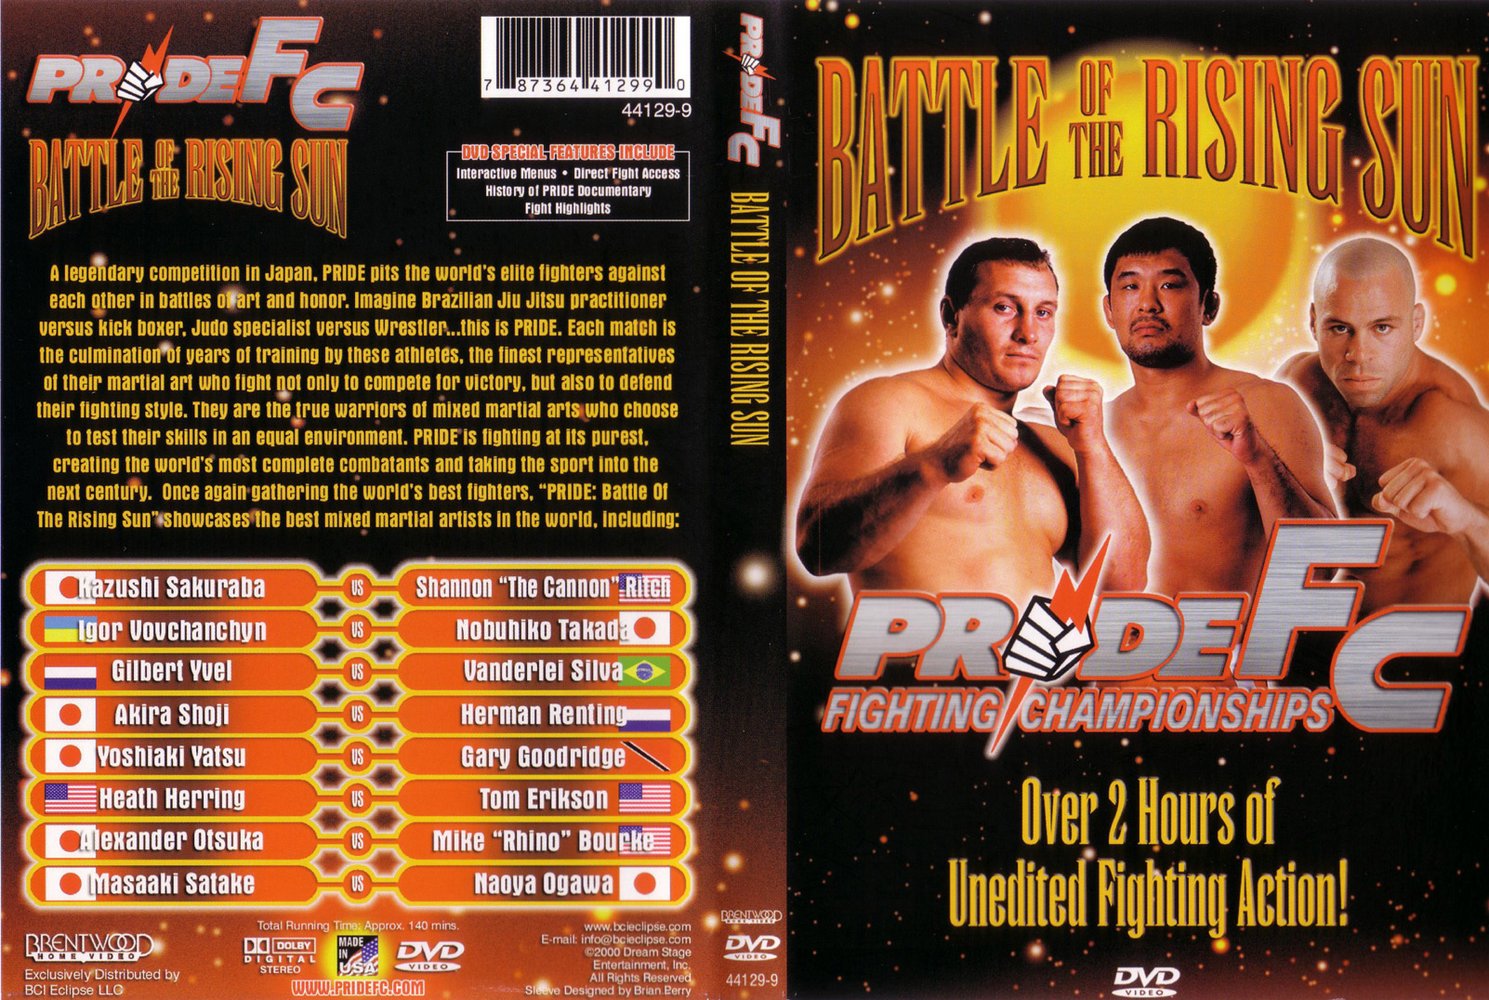 Jaquette DVD Pride Fc battle of the rising sun